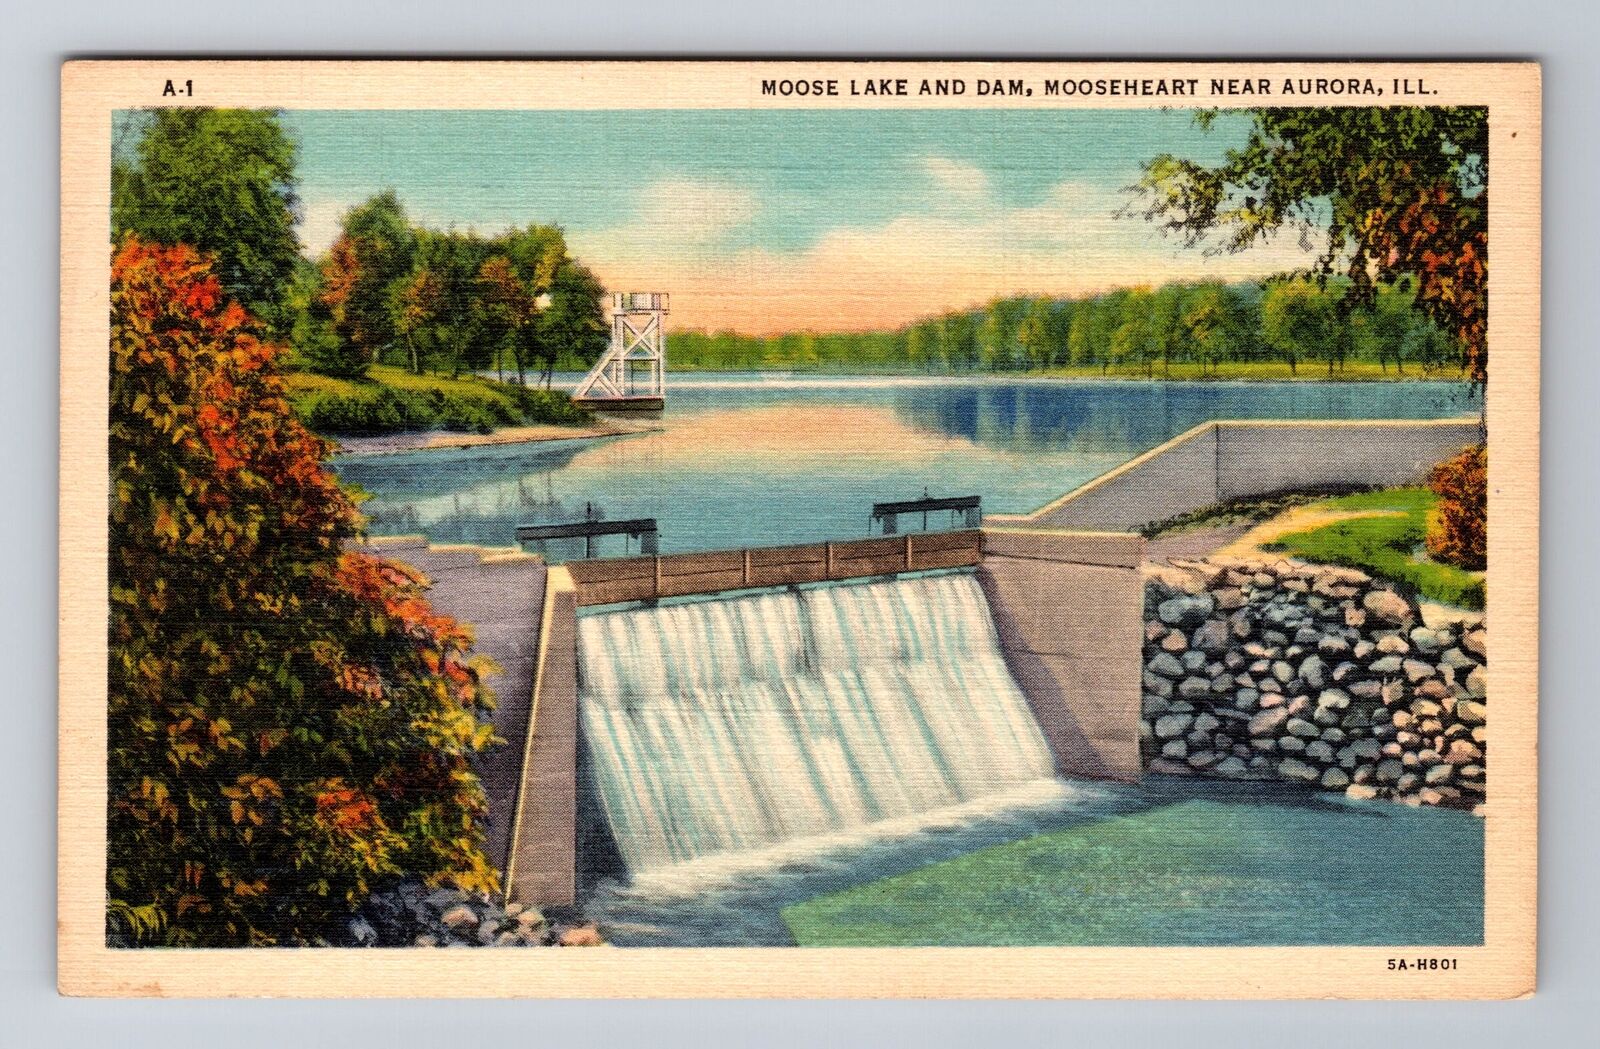 Aurora IL-Illinois, Moose Lake and Dam, Antique Vintage Souvenir Postcard